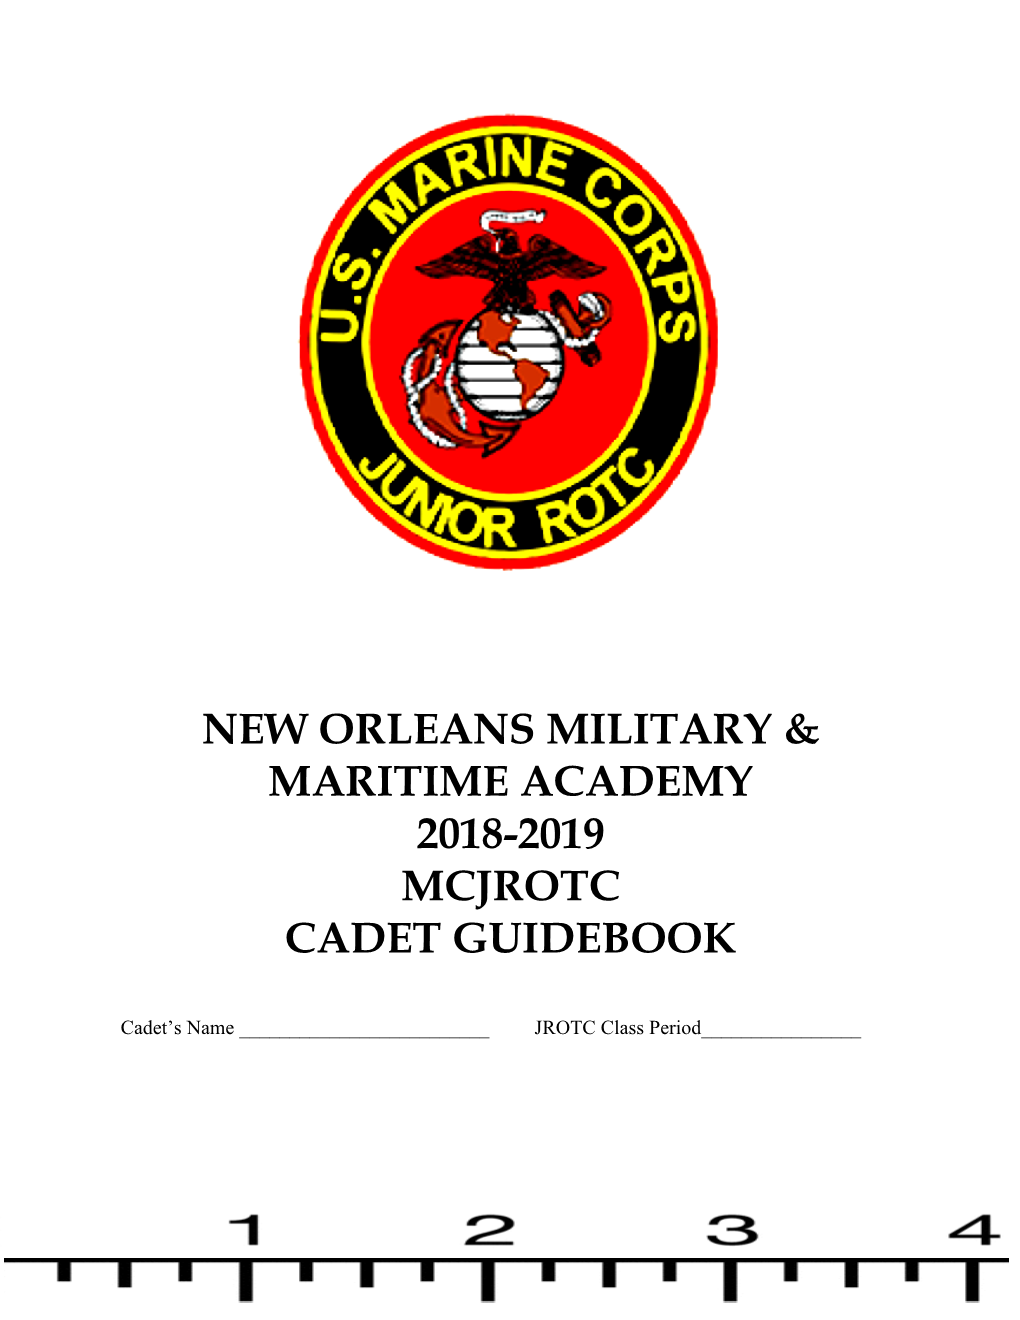 Cadet Guidebook